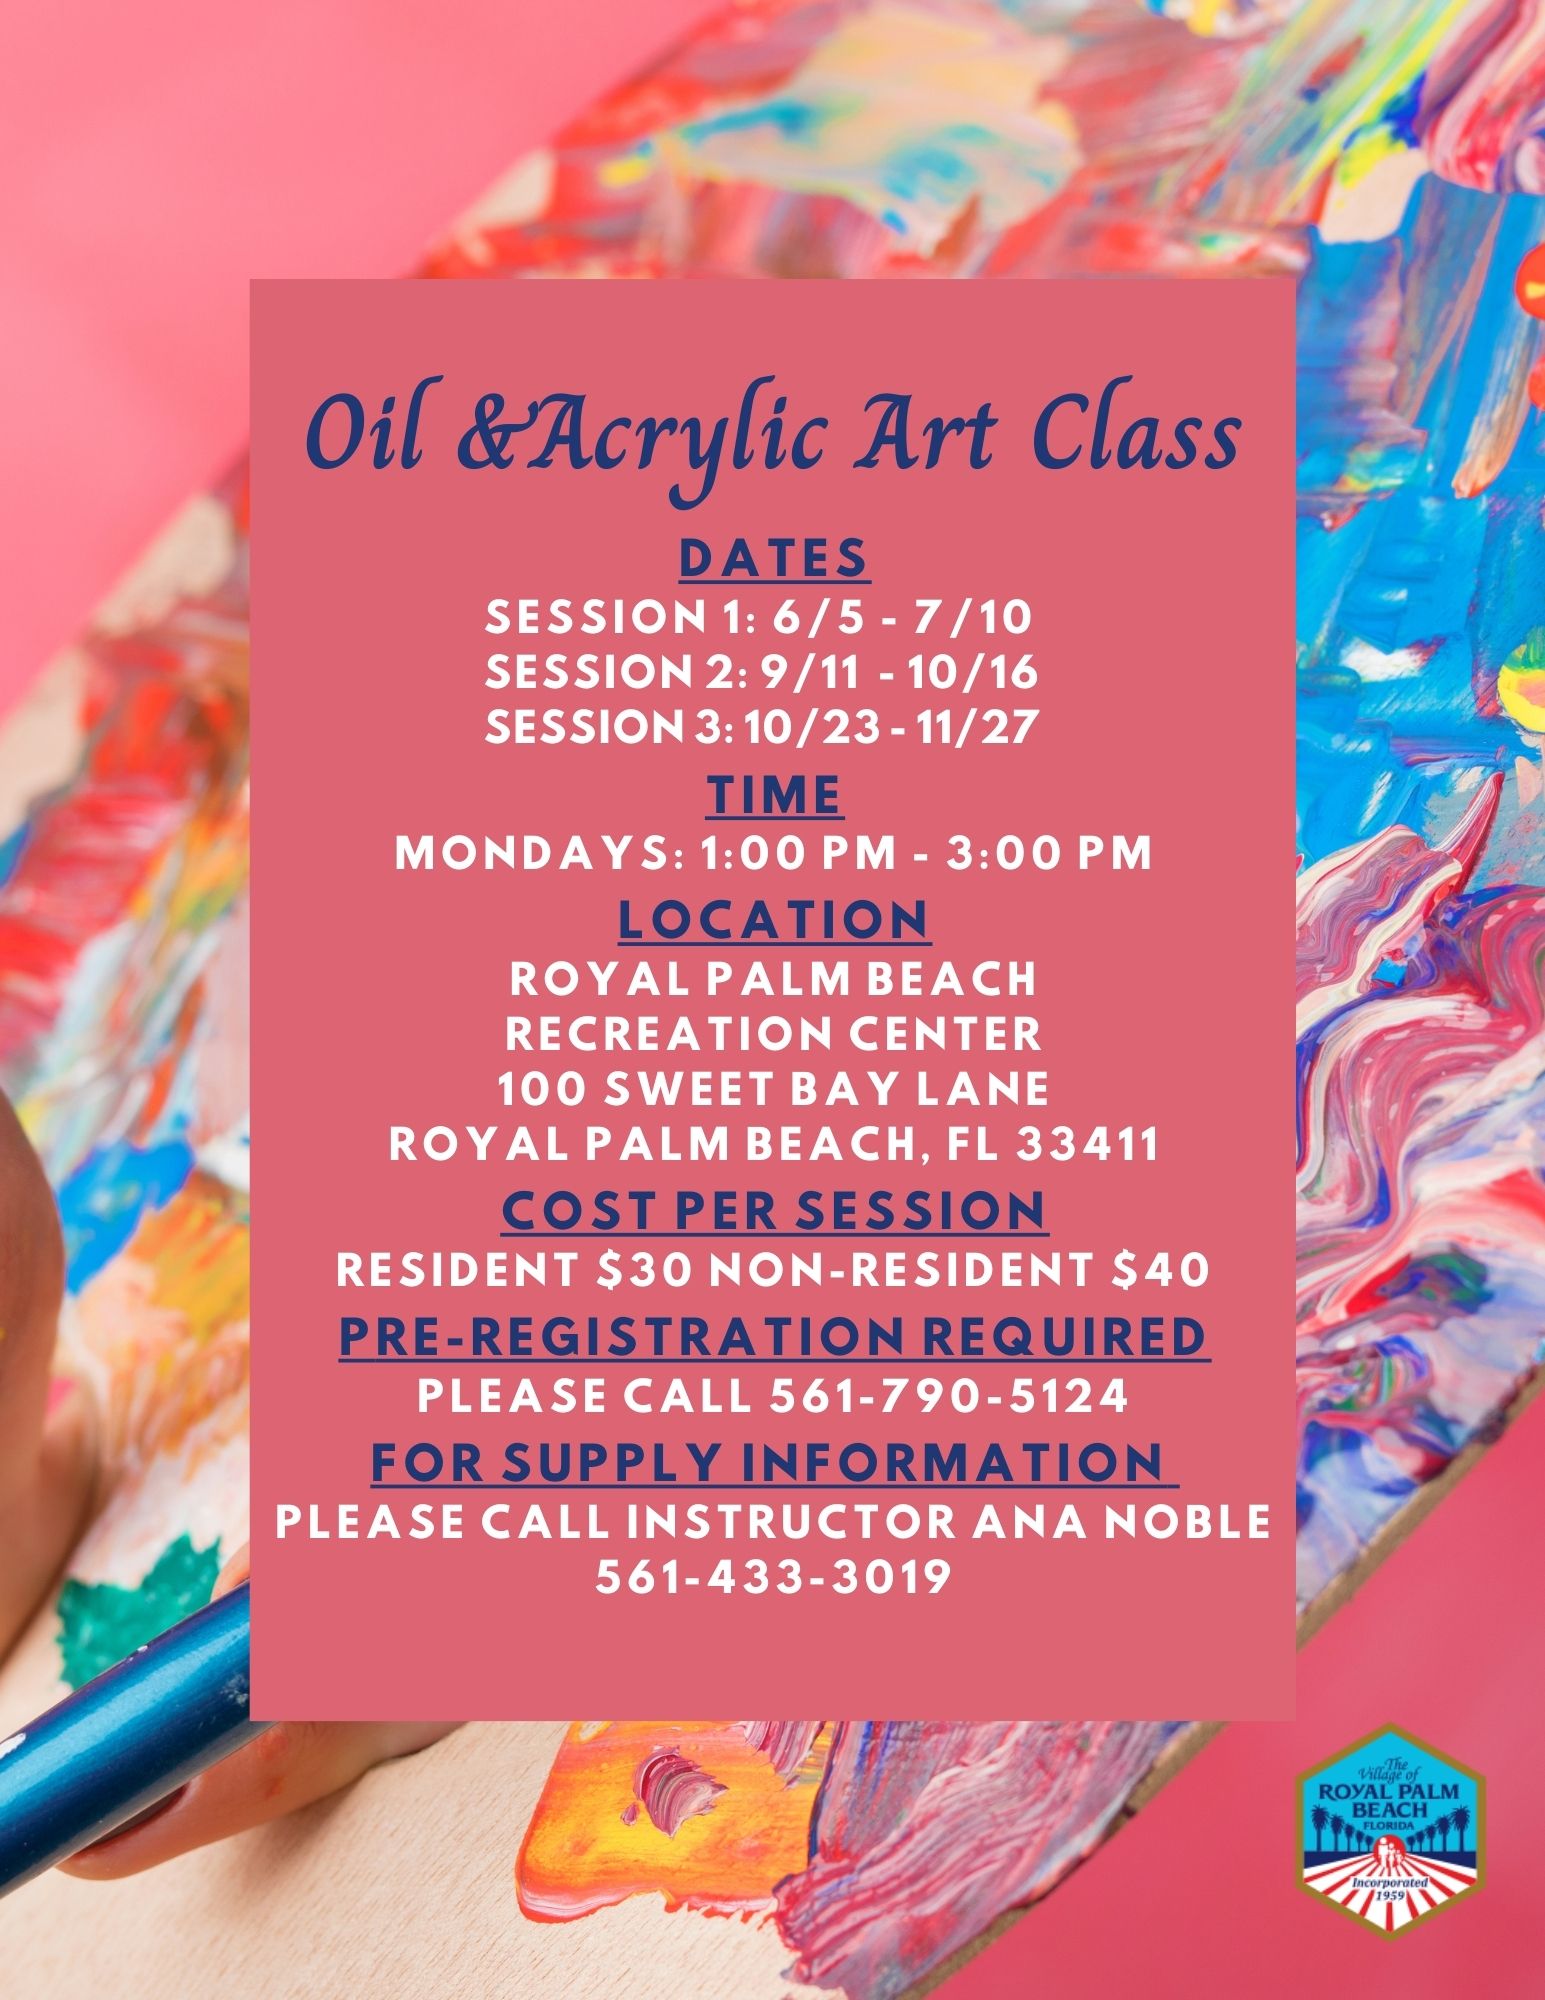 Oil & Acrylic Art Class | Village of Royal Palm Beach Florida